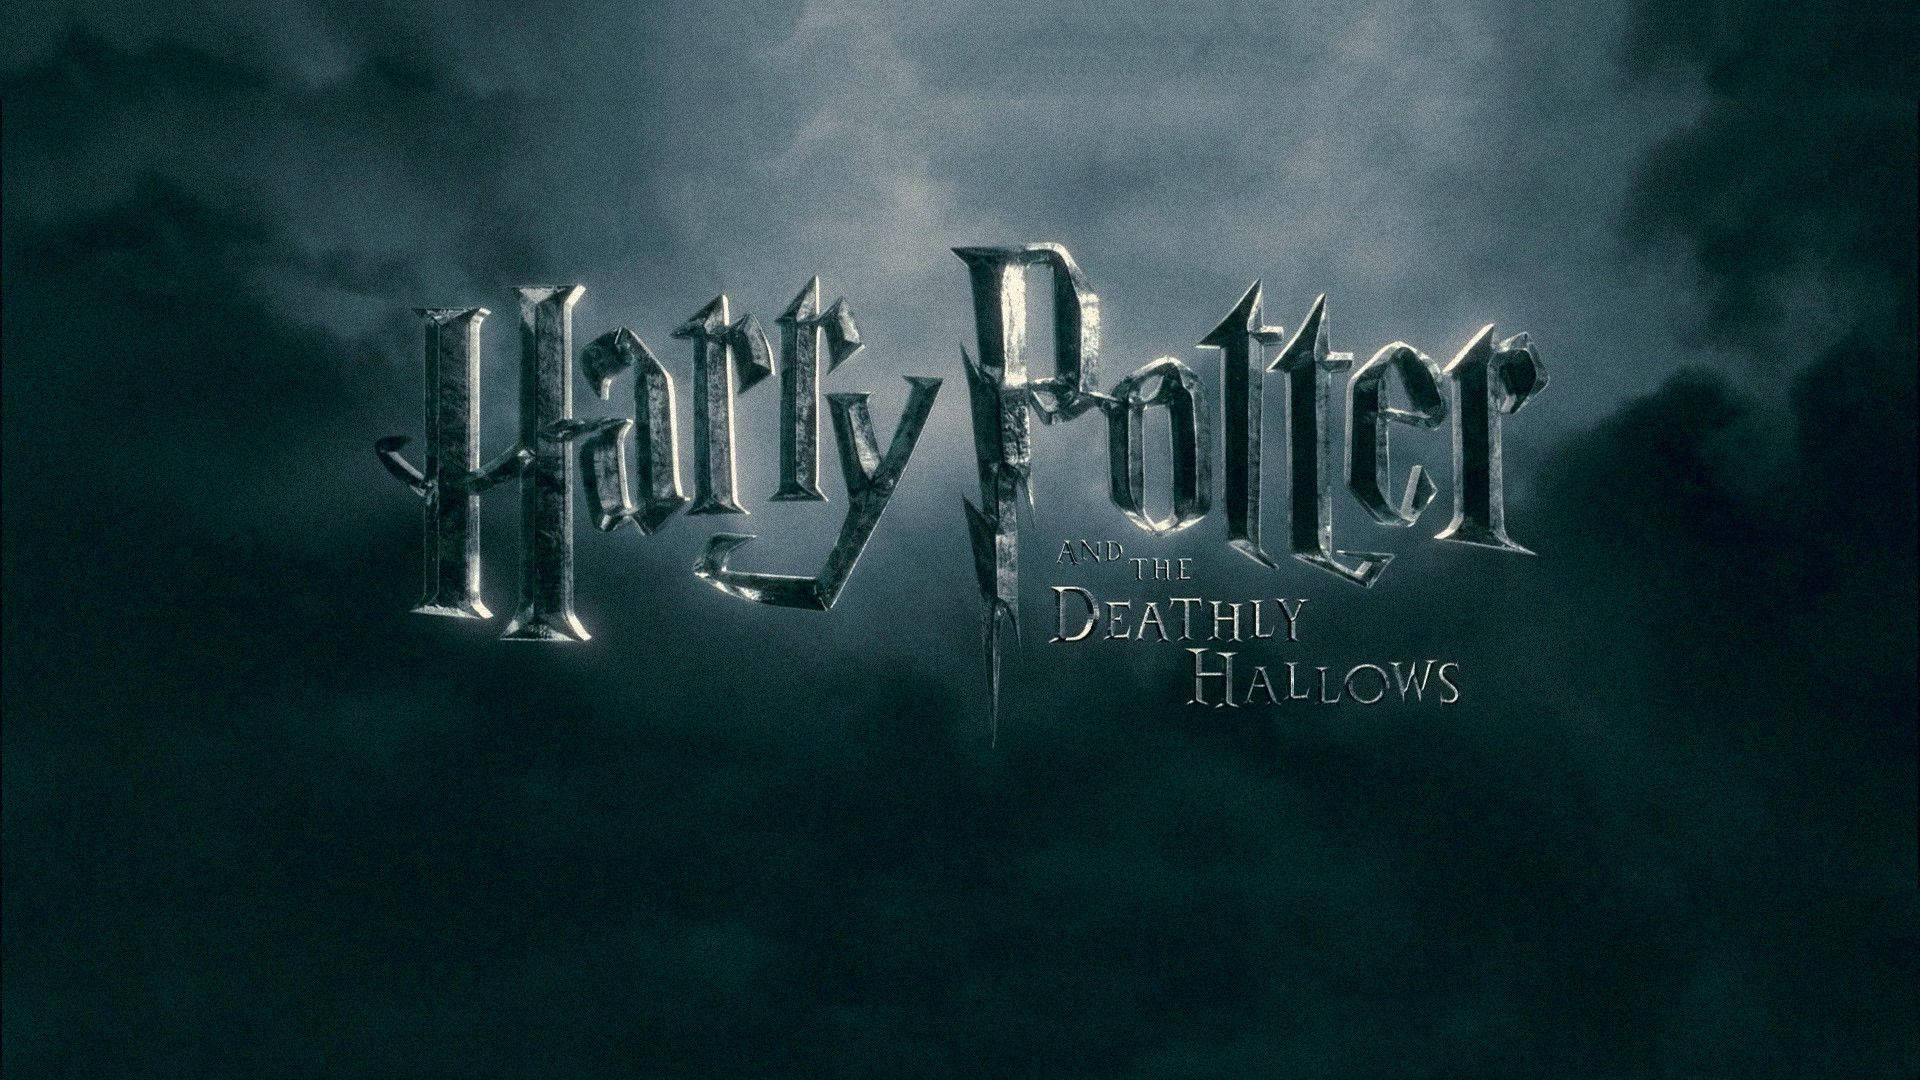 Free Harry Potter Laptop Wallpaper Downloads, [100+] Harry Potter Laptop  Wallpapers for FREE 